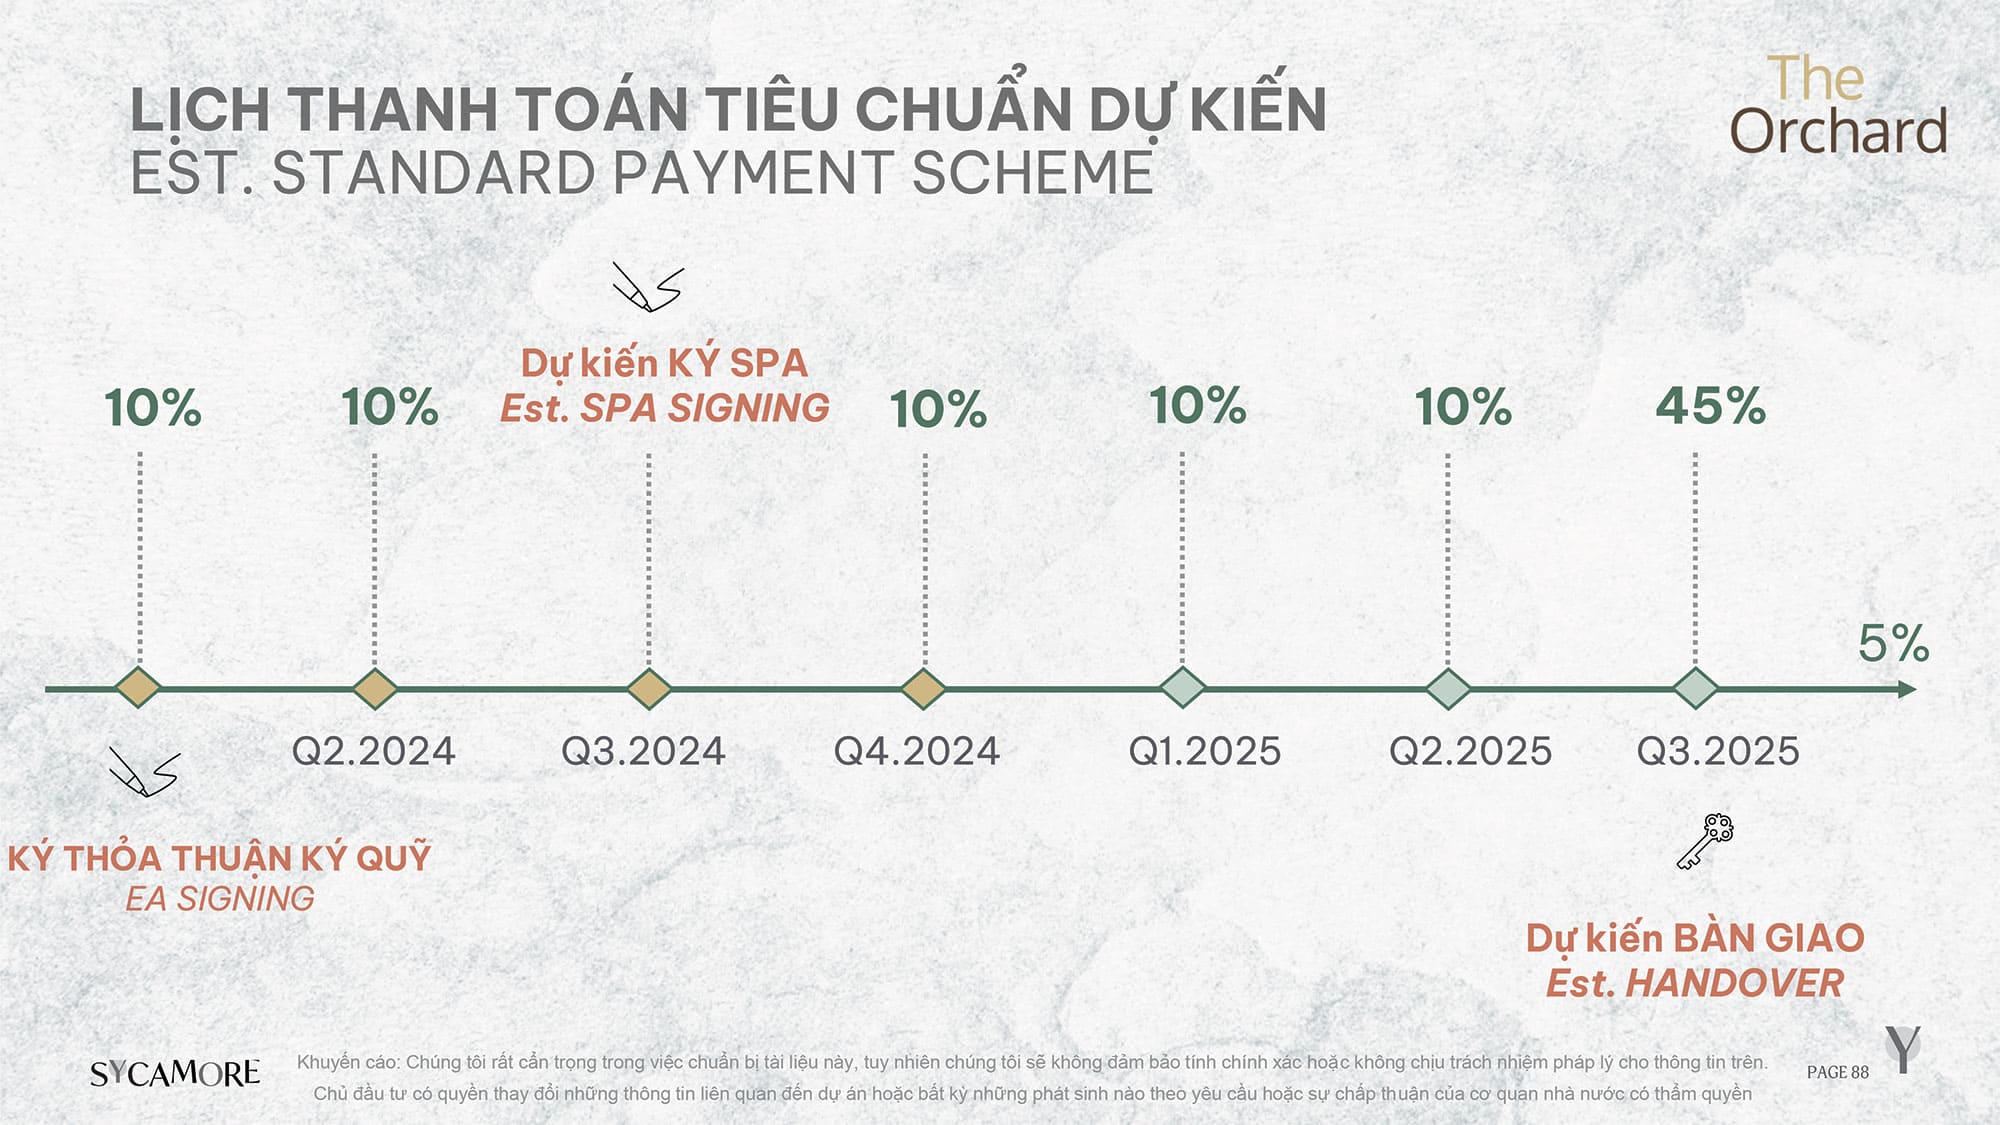 Chính sách thanh toán tiêu chuẩn du kien cho san pham phan khu The Orchard tai du an Sycamore Capitaland